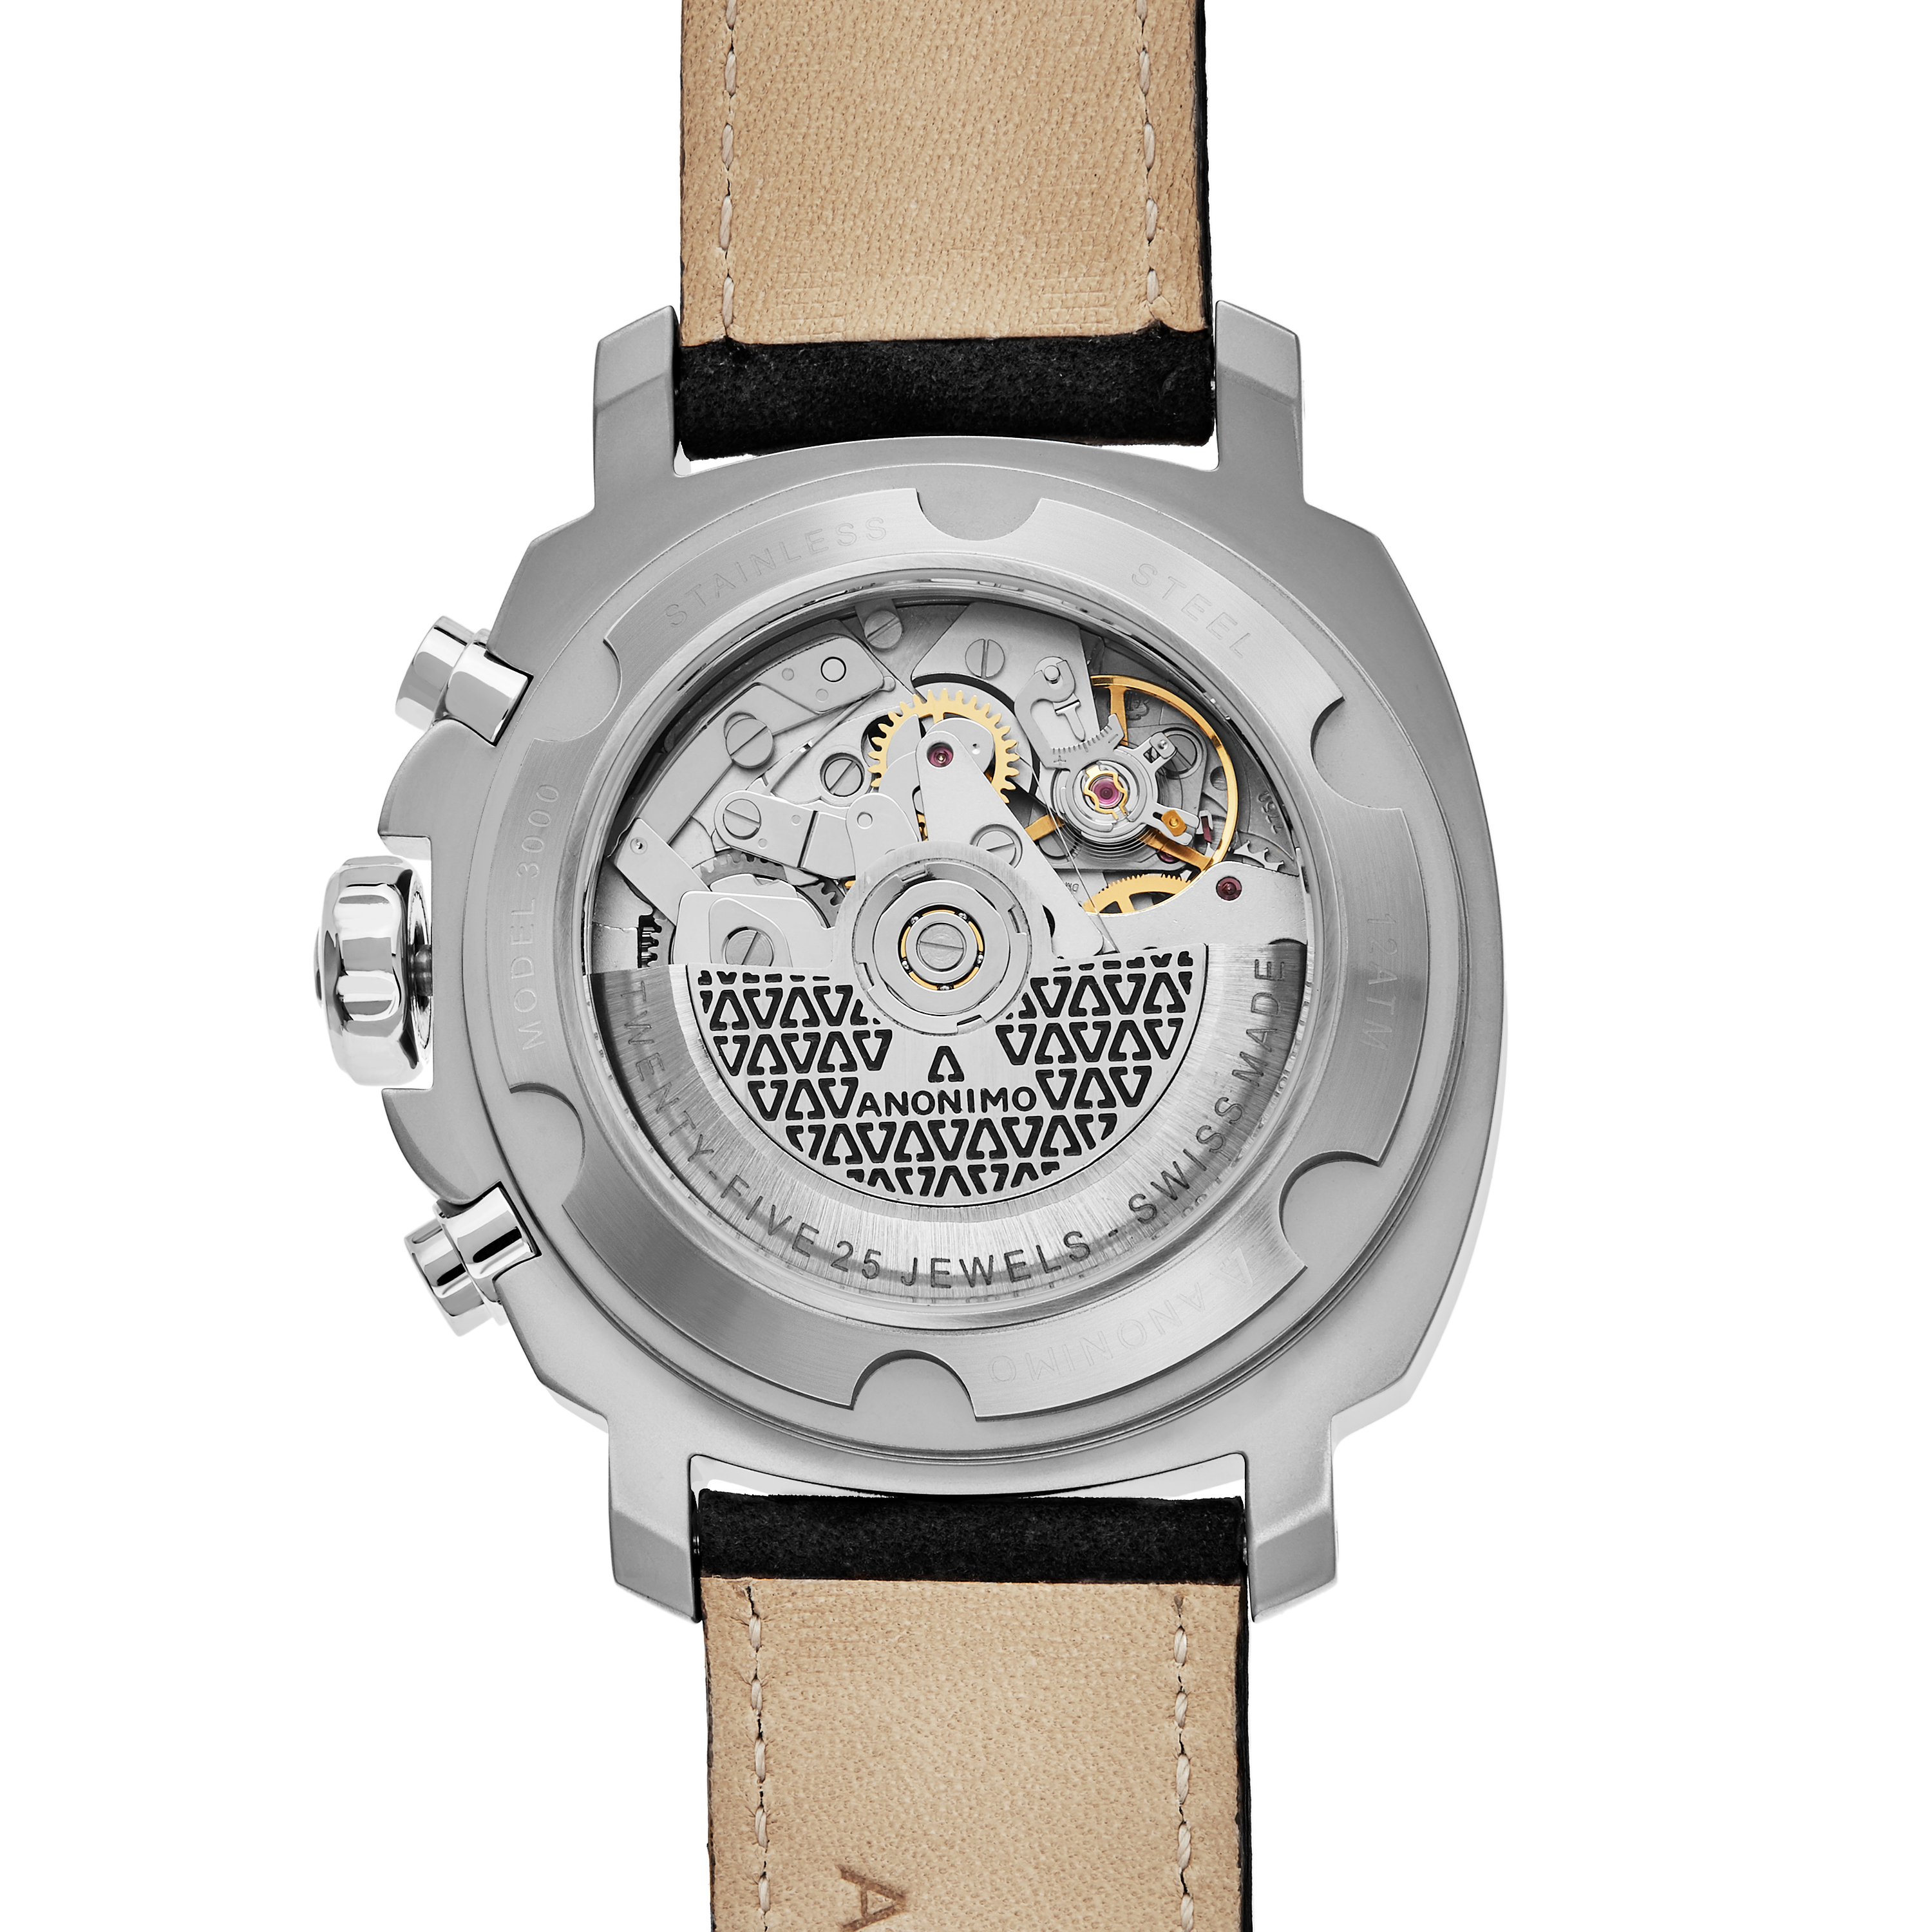 Anonimo Cronoscopio Men's Watch Model AM-3000.01.003.A01 Thumbnail 2